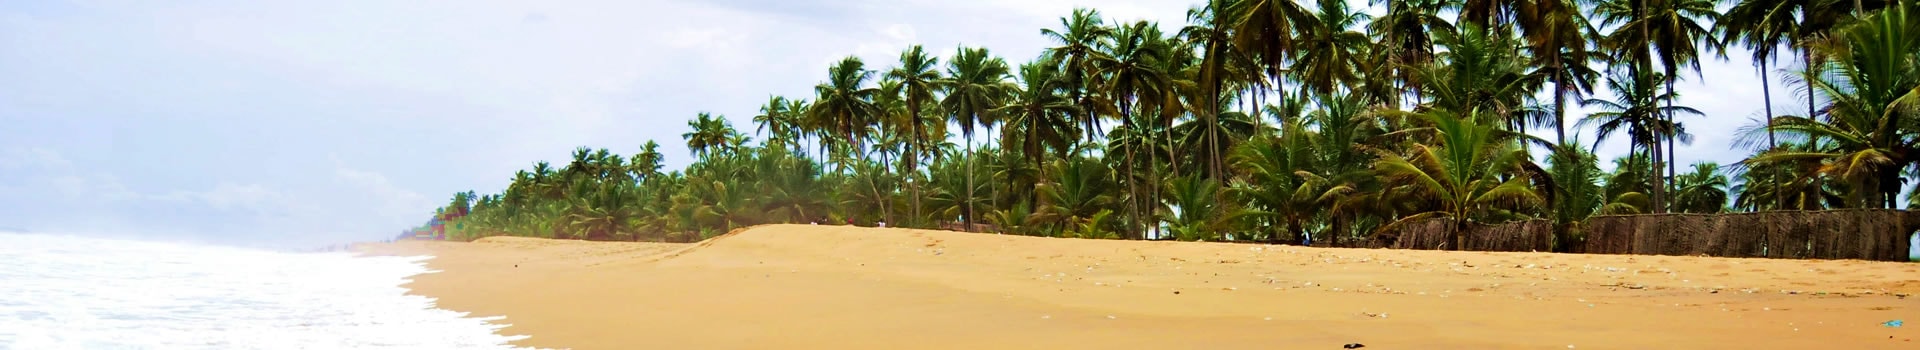 Costa De Marfil